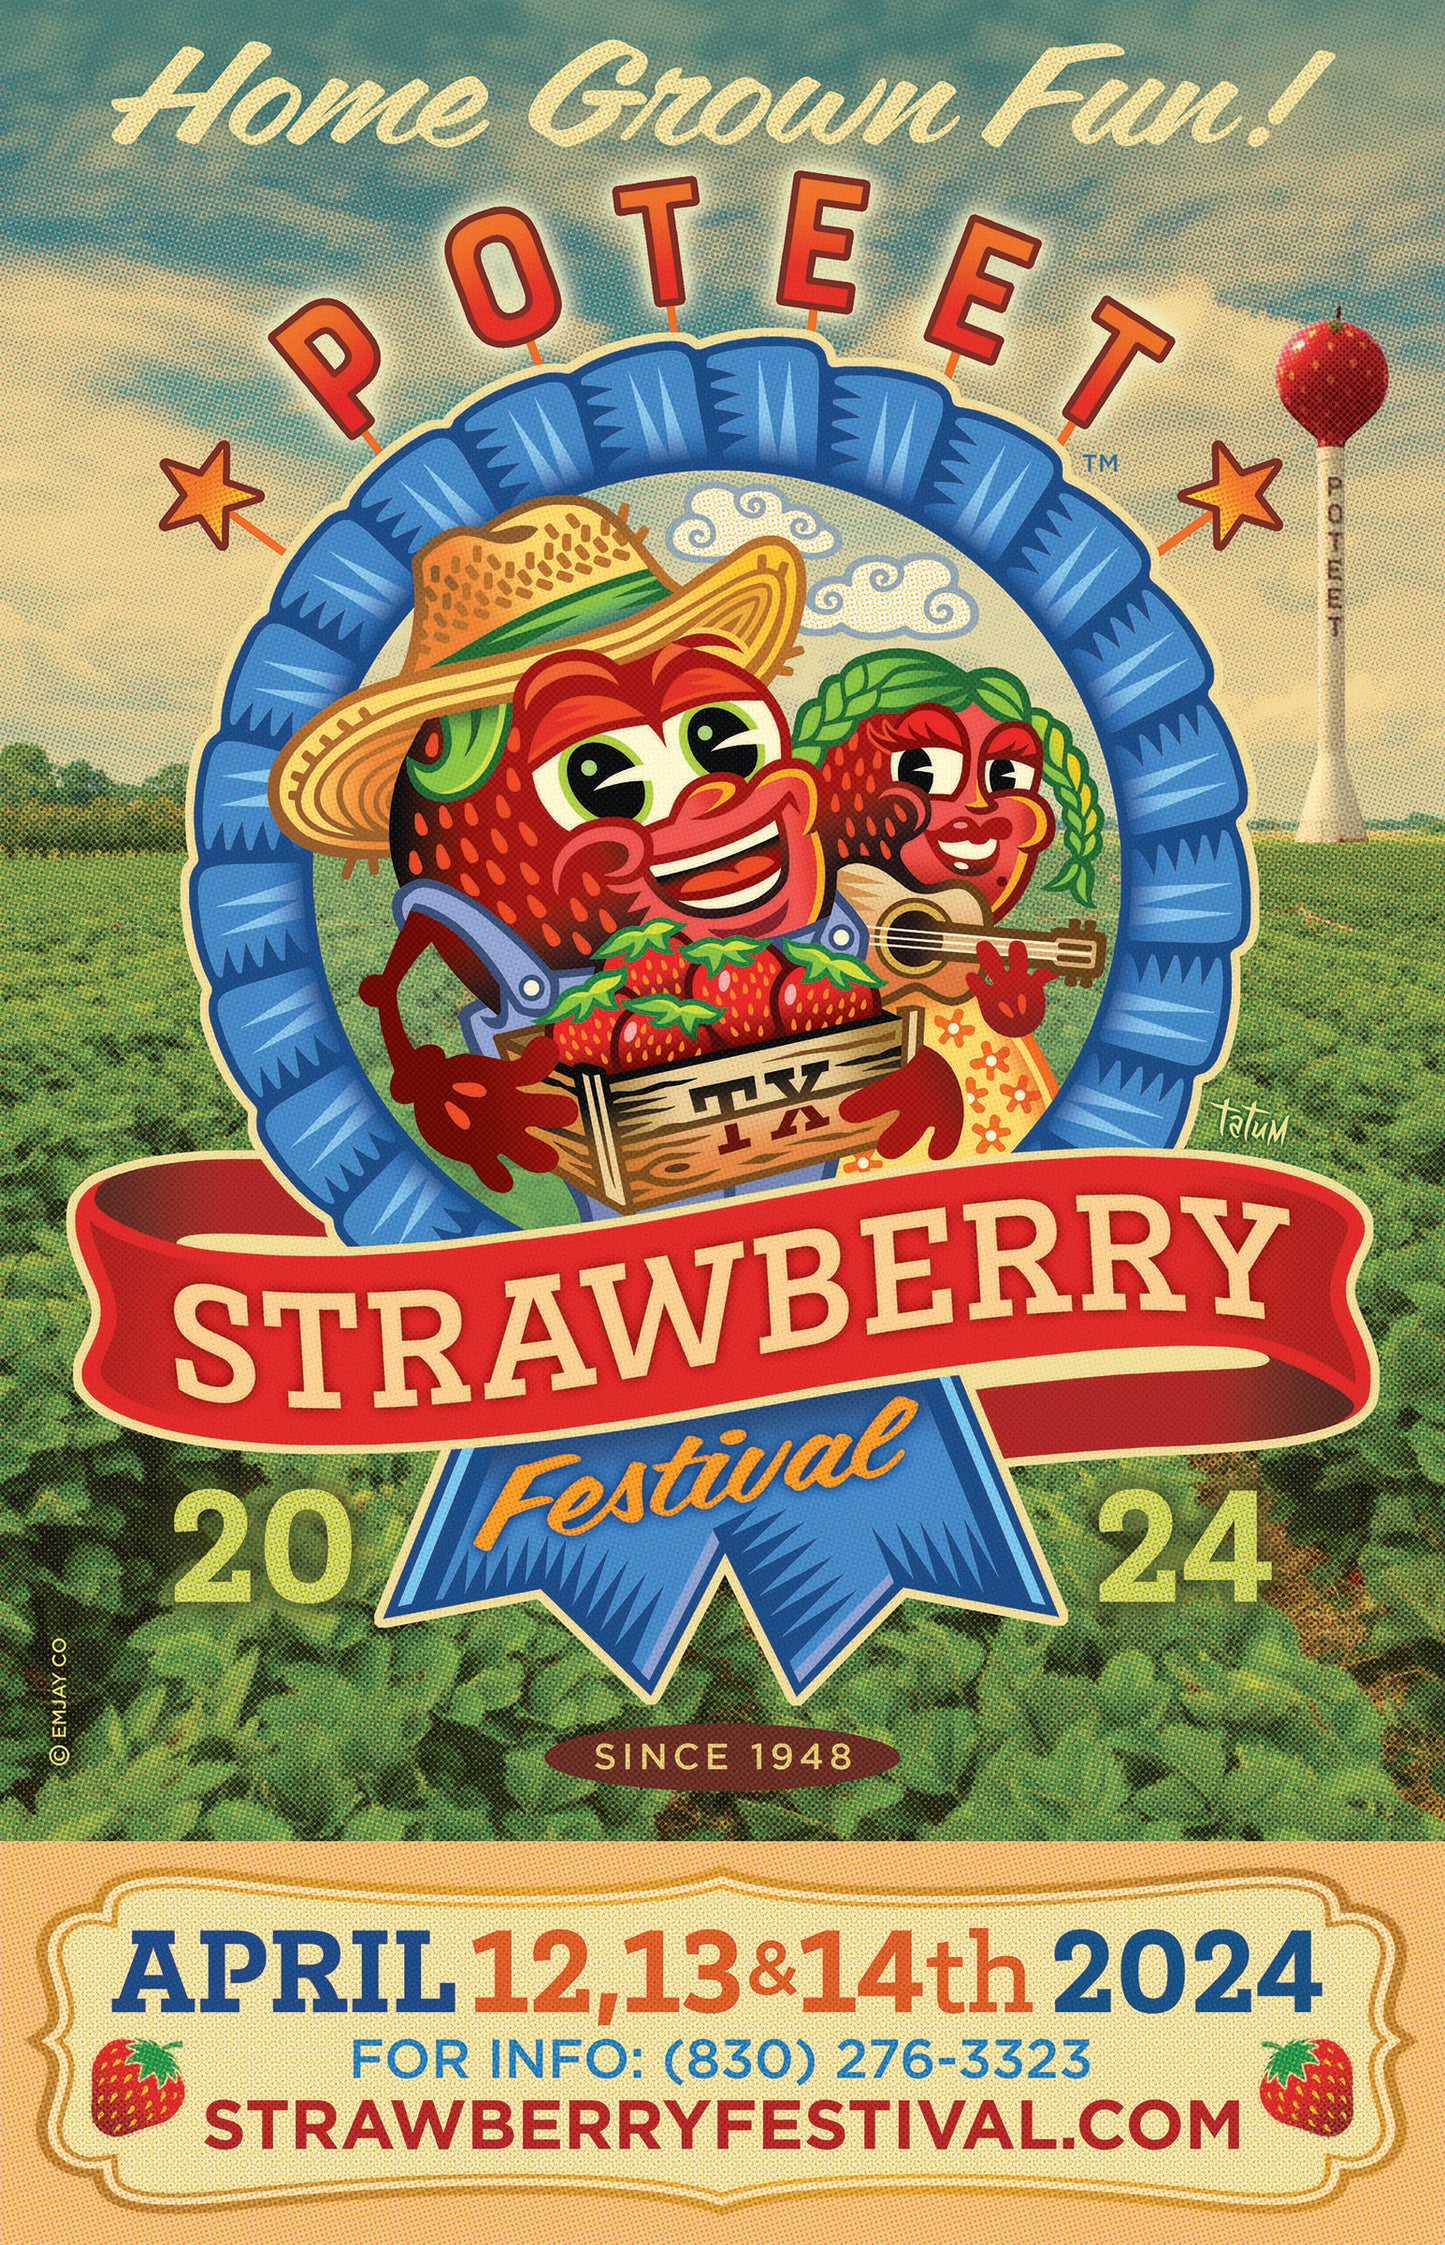 2024 Poteet Strawberry Festival Tote Bag